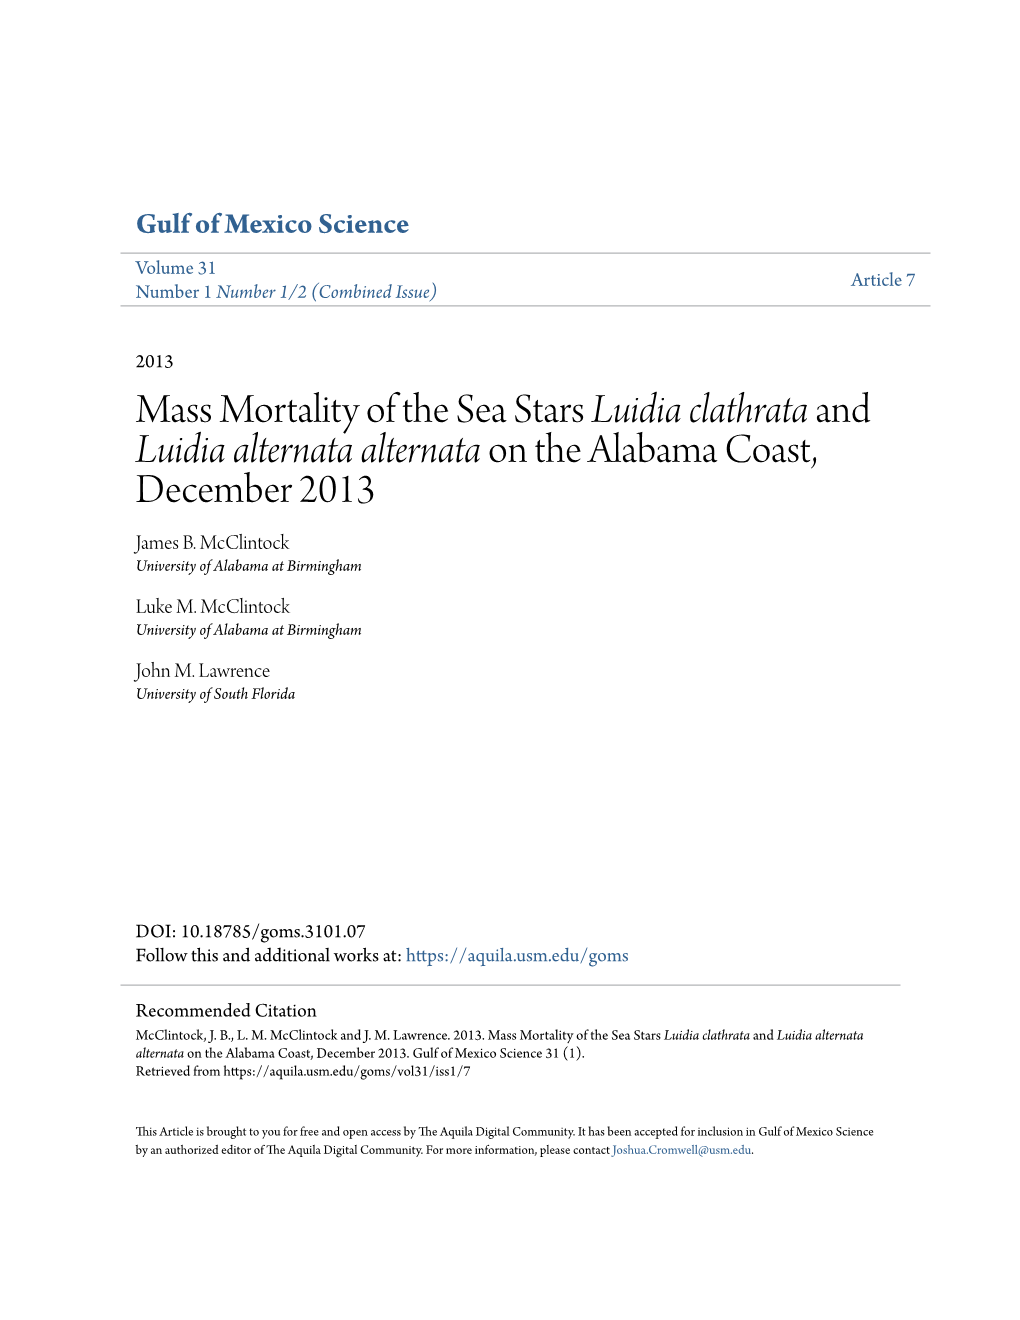 Mass Mortality of the Sea Stars Luidia Clathrata and Luidia Alternata Alternata on the Alabama Coast, December 2013 James B